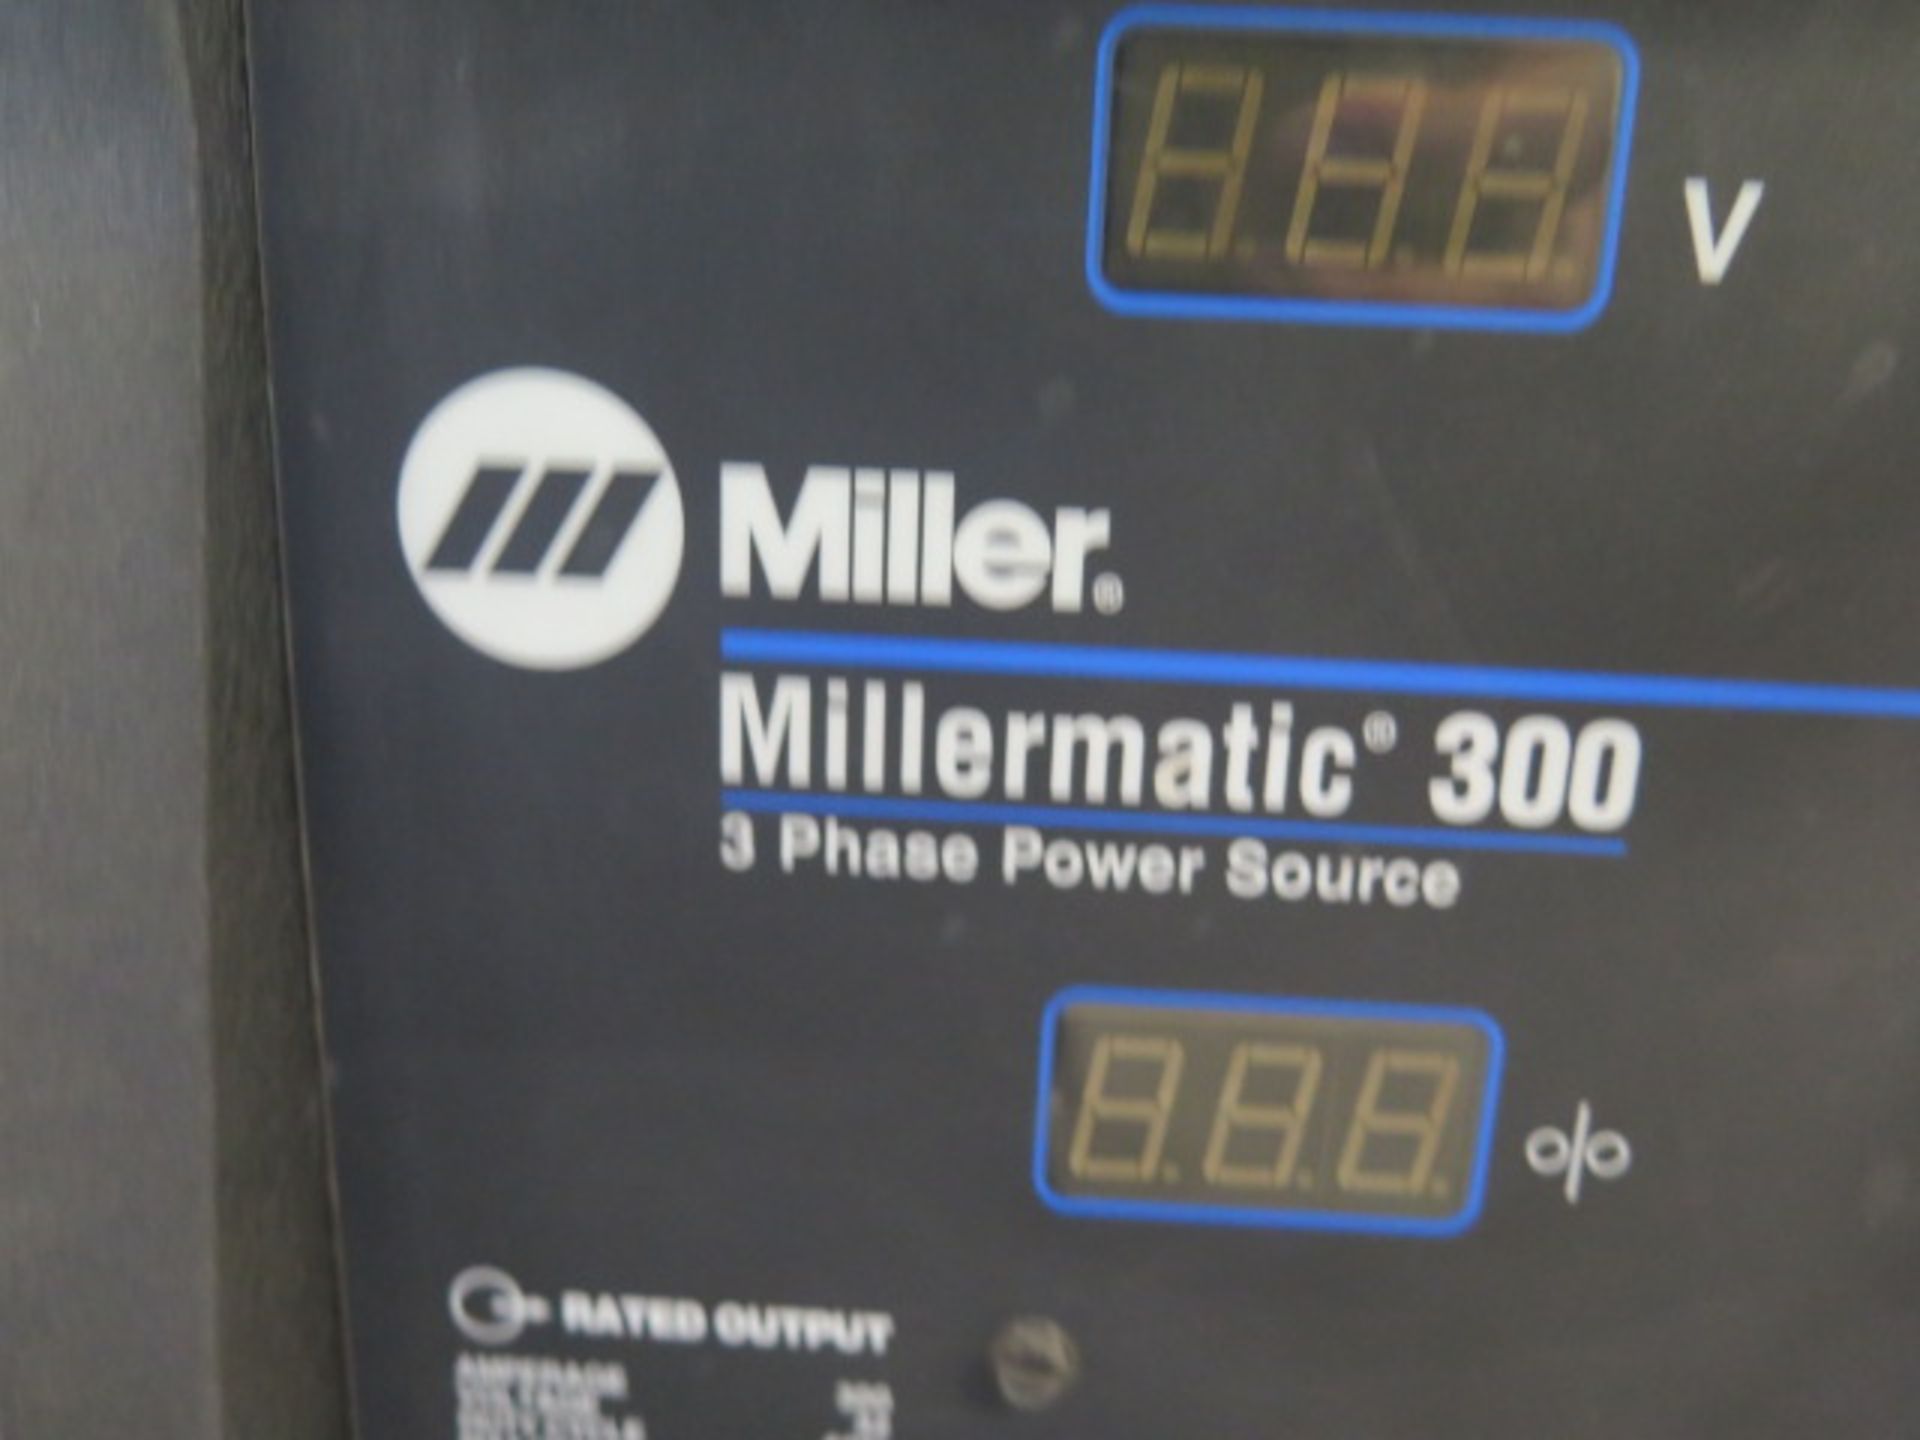 Miller Millermatic 300 Arc Welding Power Source s/n LA074750 - Image 5 of 5